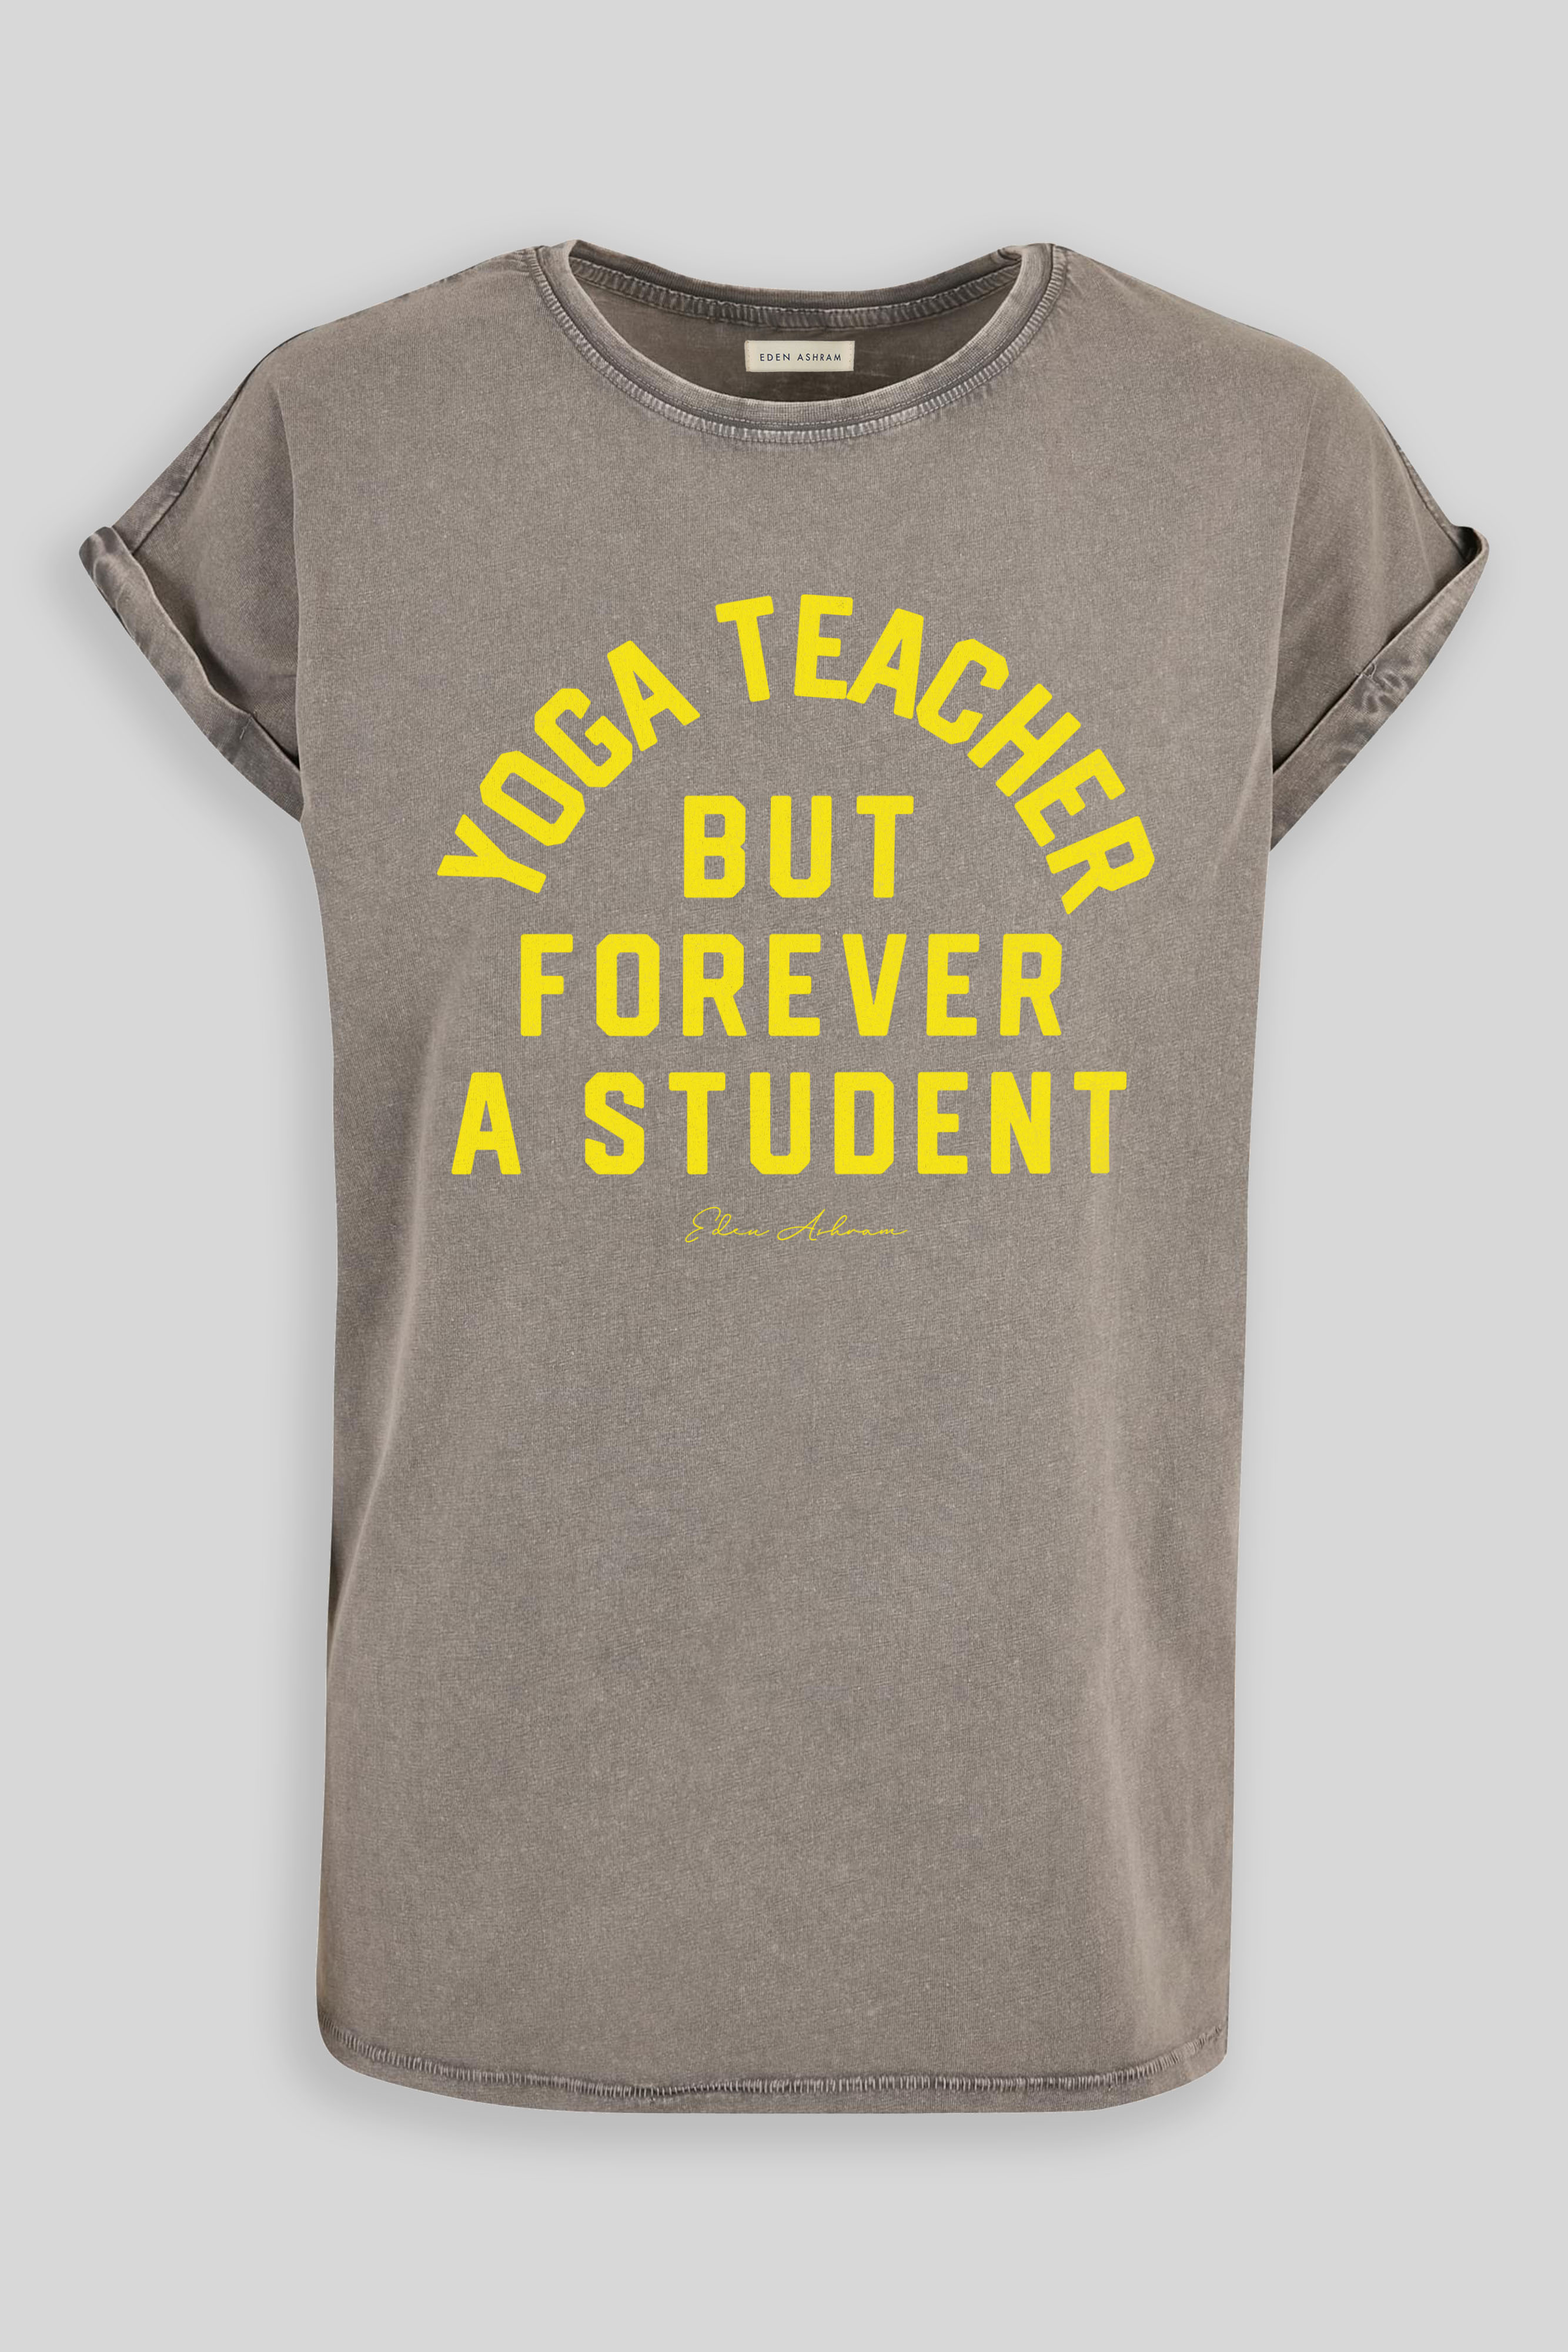 EDEN ASHRAM Yoga Teacher But Forever A Student Premium Relaxed Boyfriend T-Shirt Acid Wash Grey